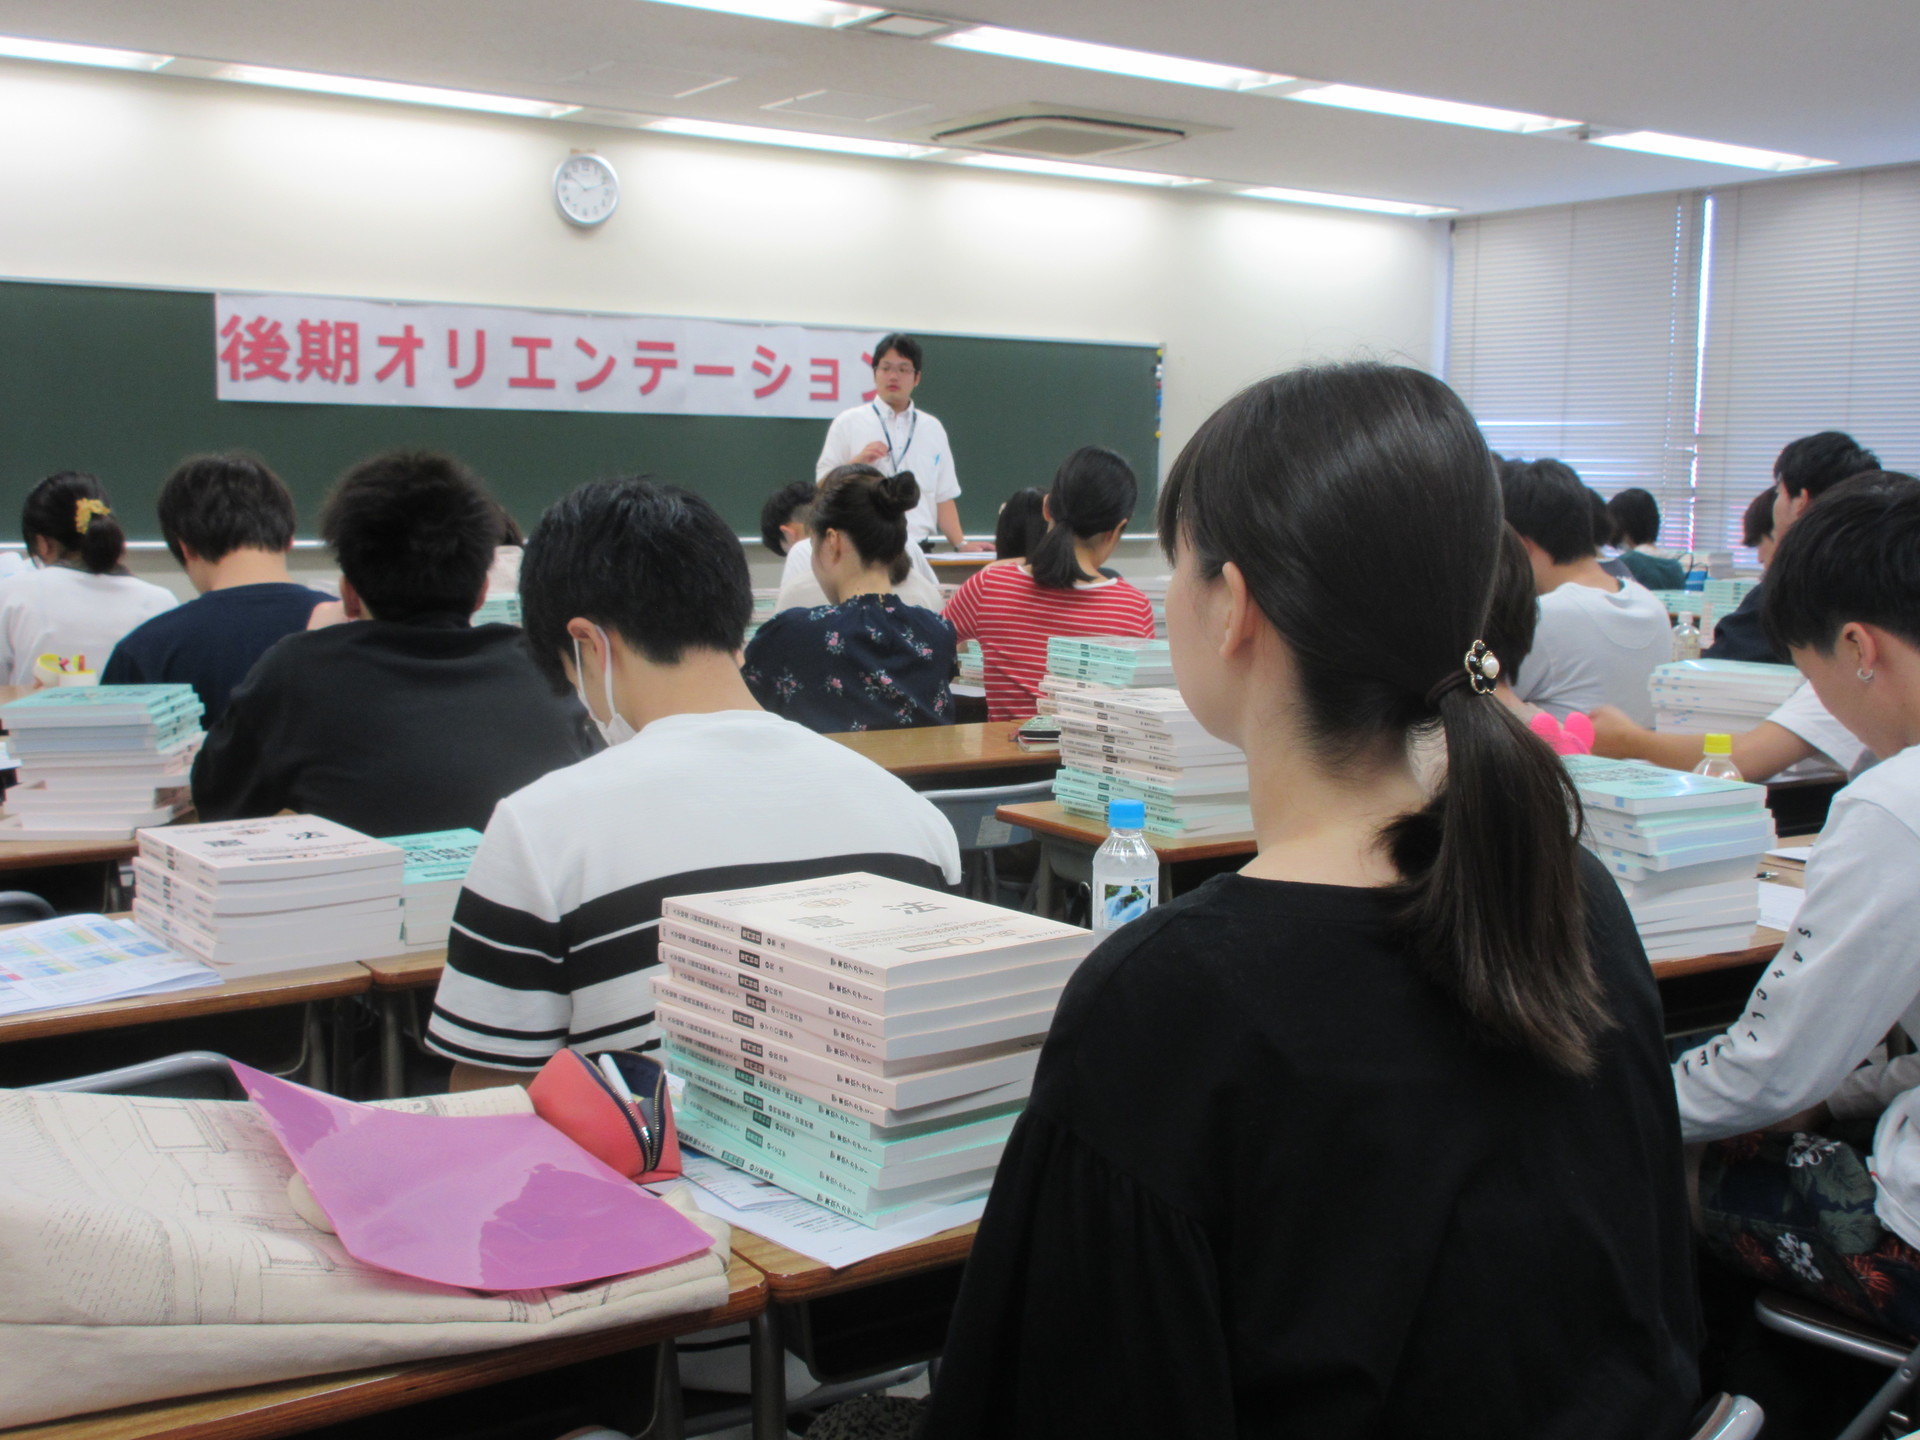 日記 東京アカデミー松山校 教員採用試験 看護師国家試験 公務員試験 のブログ